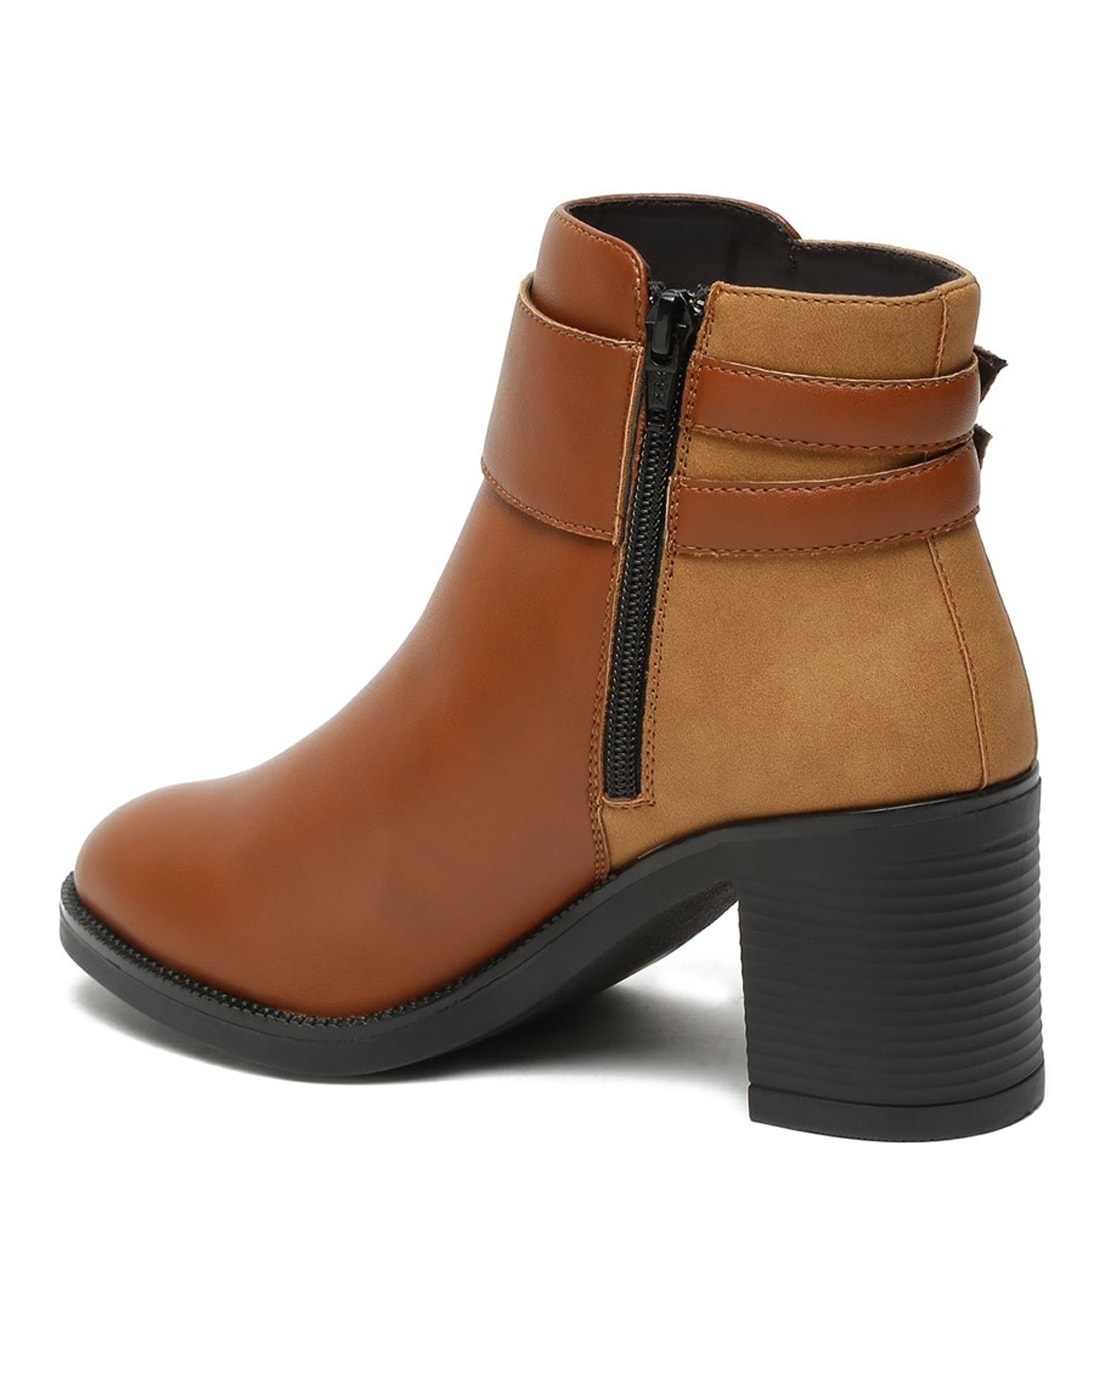 Cleo Tan Boots Casual Shoe for Women